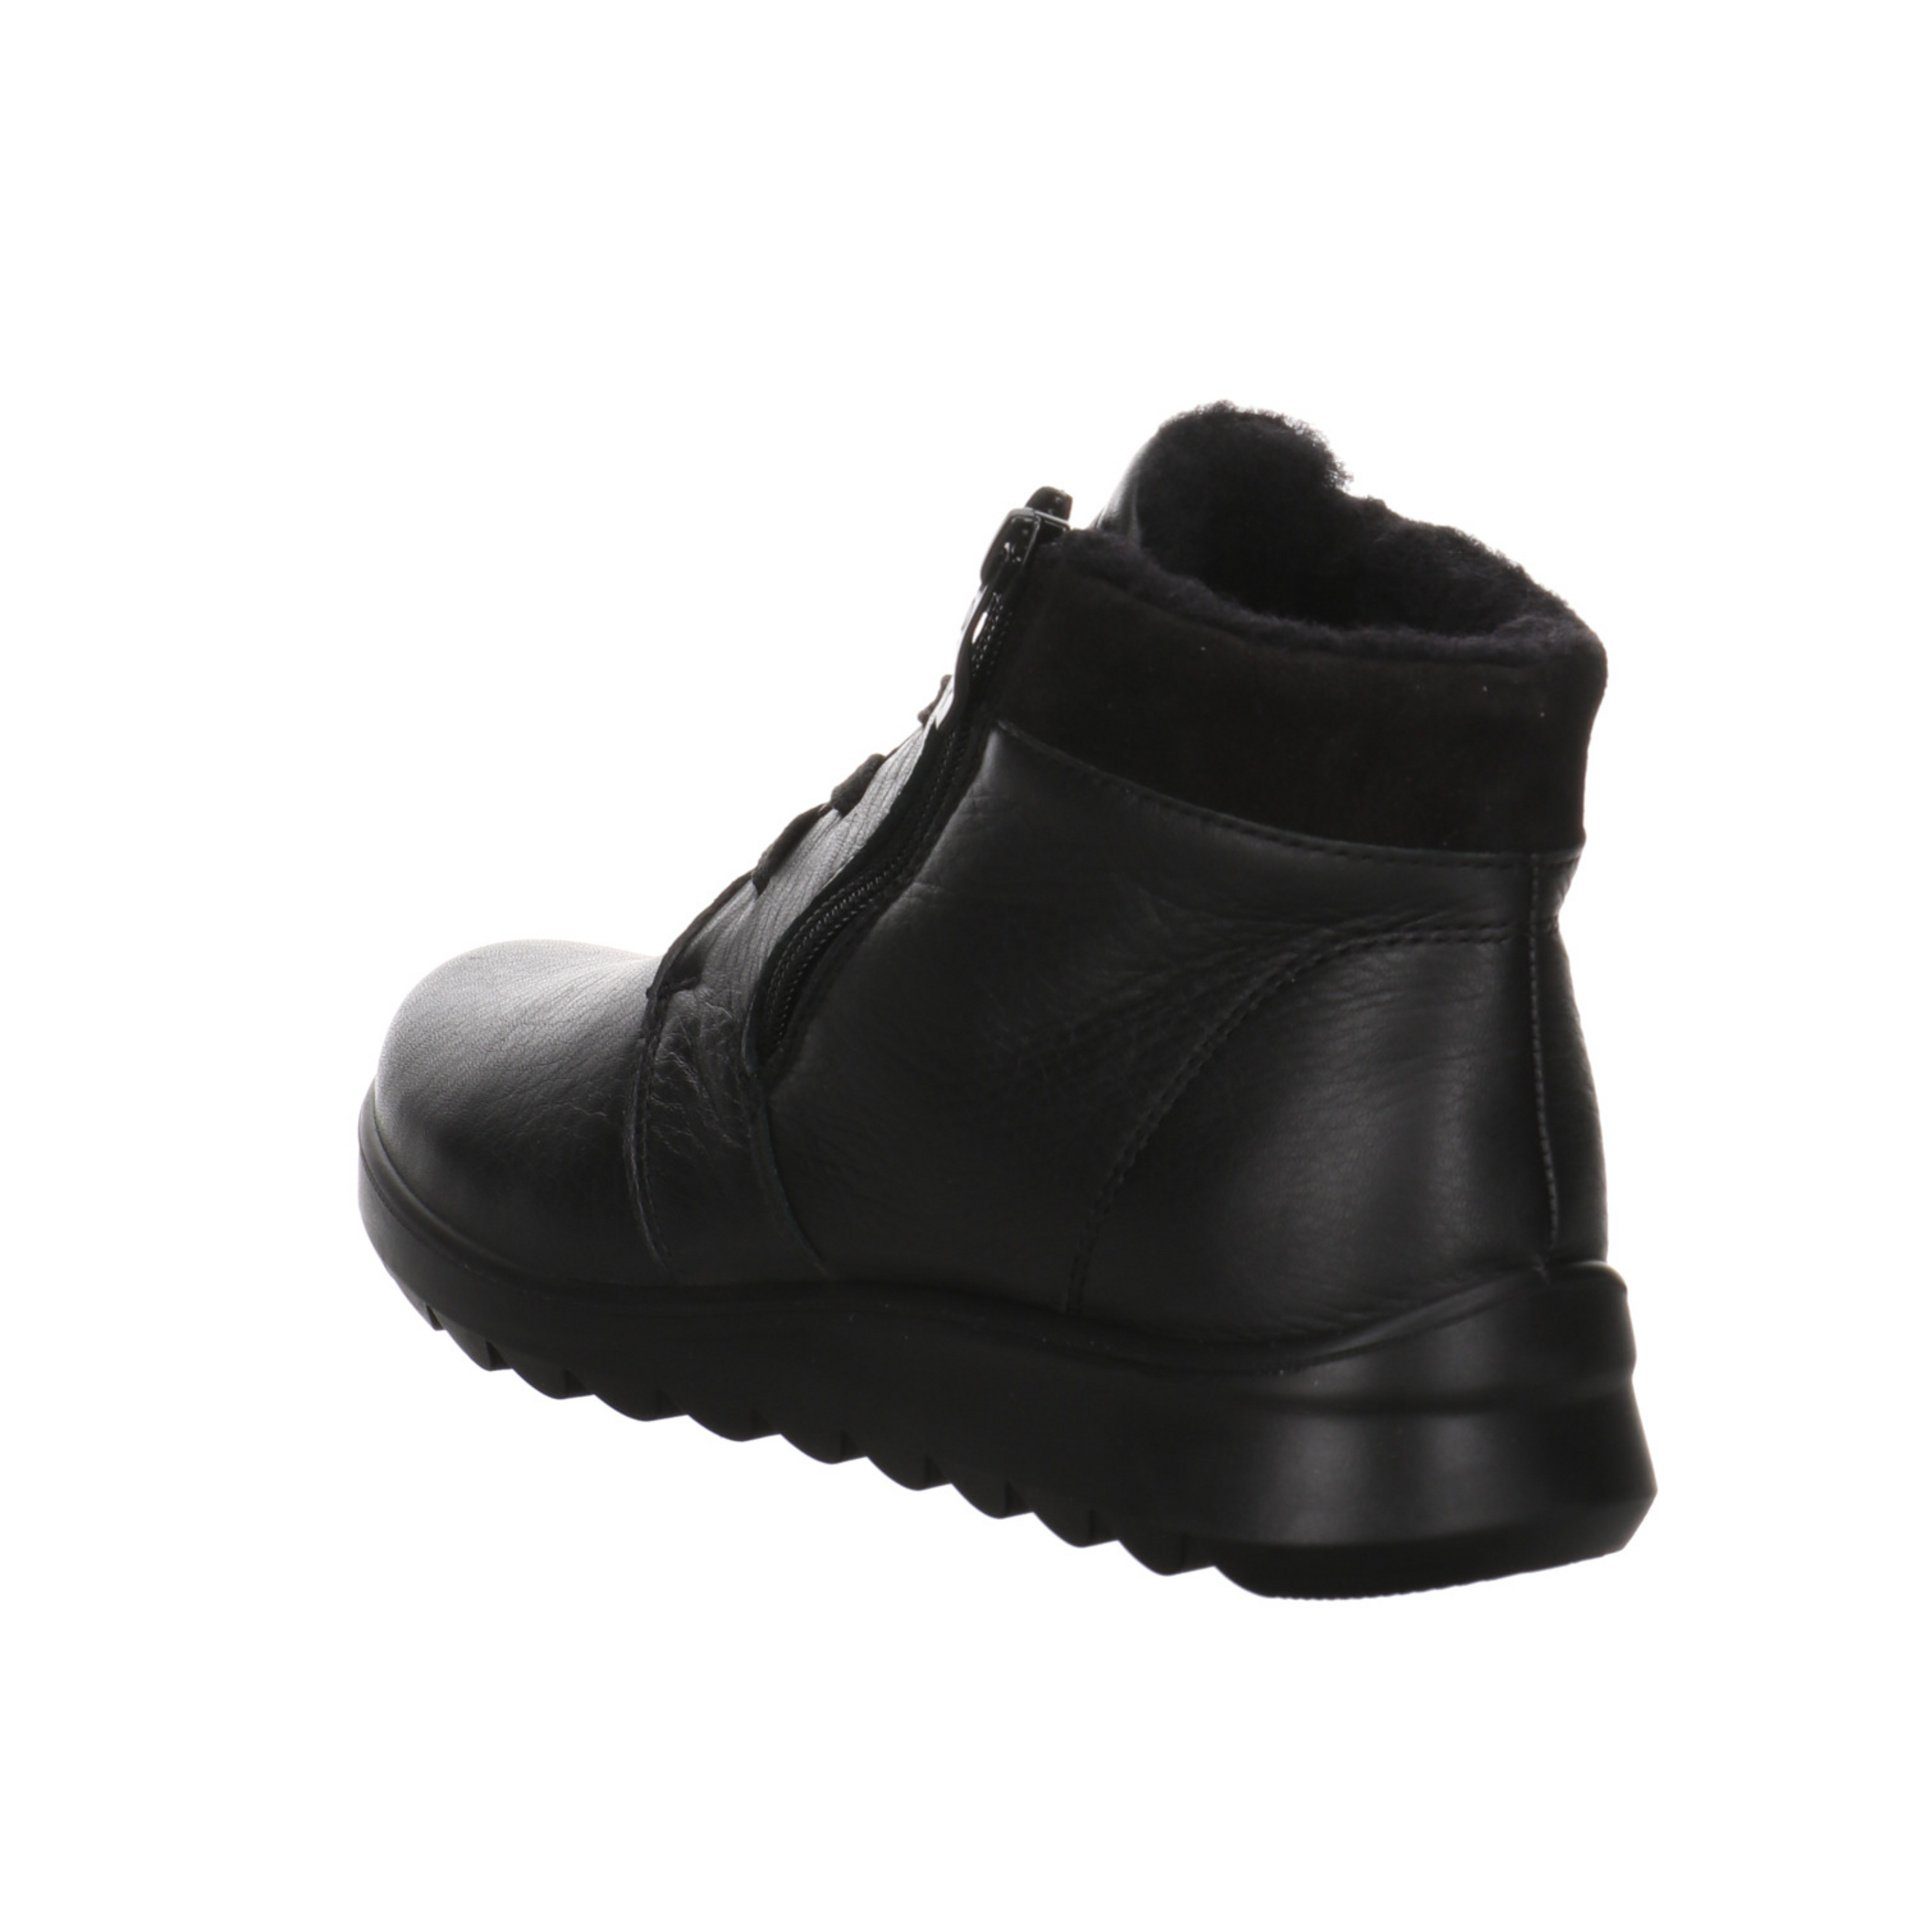 Ara Damen 046874 Toronto Stiefel Stiefelette Boots Schuhe Lederkombination schwarz